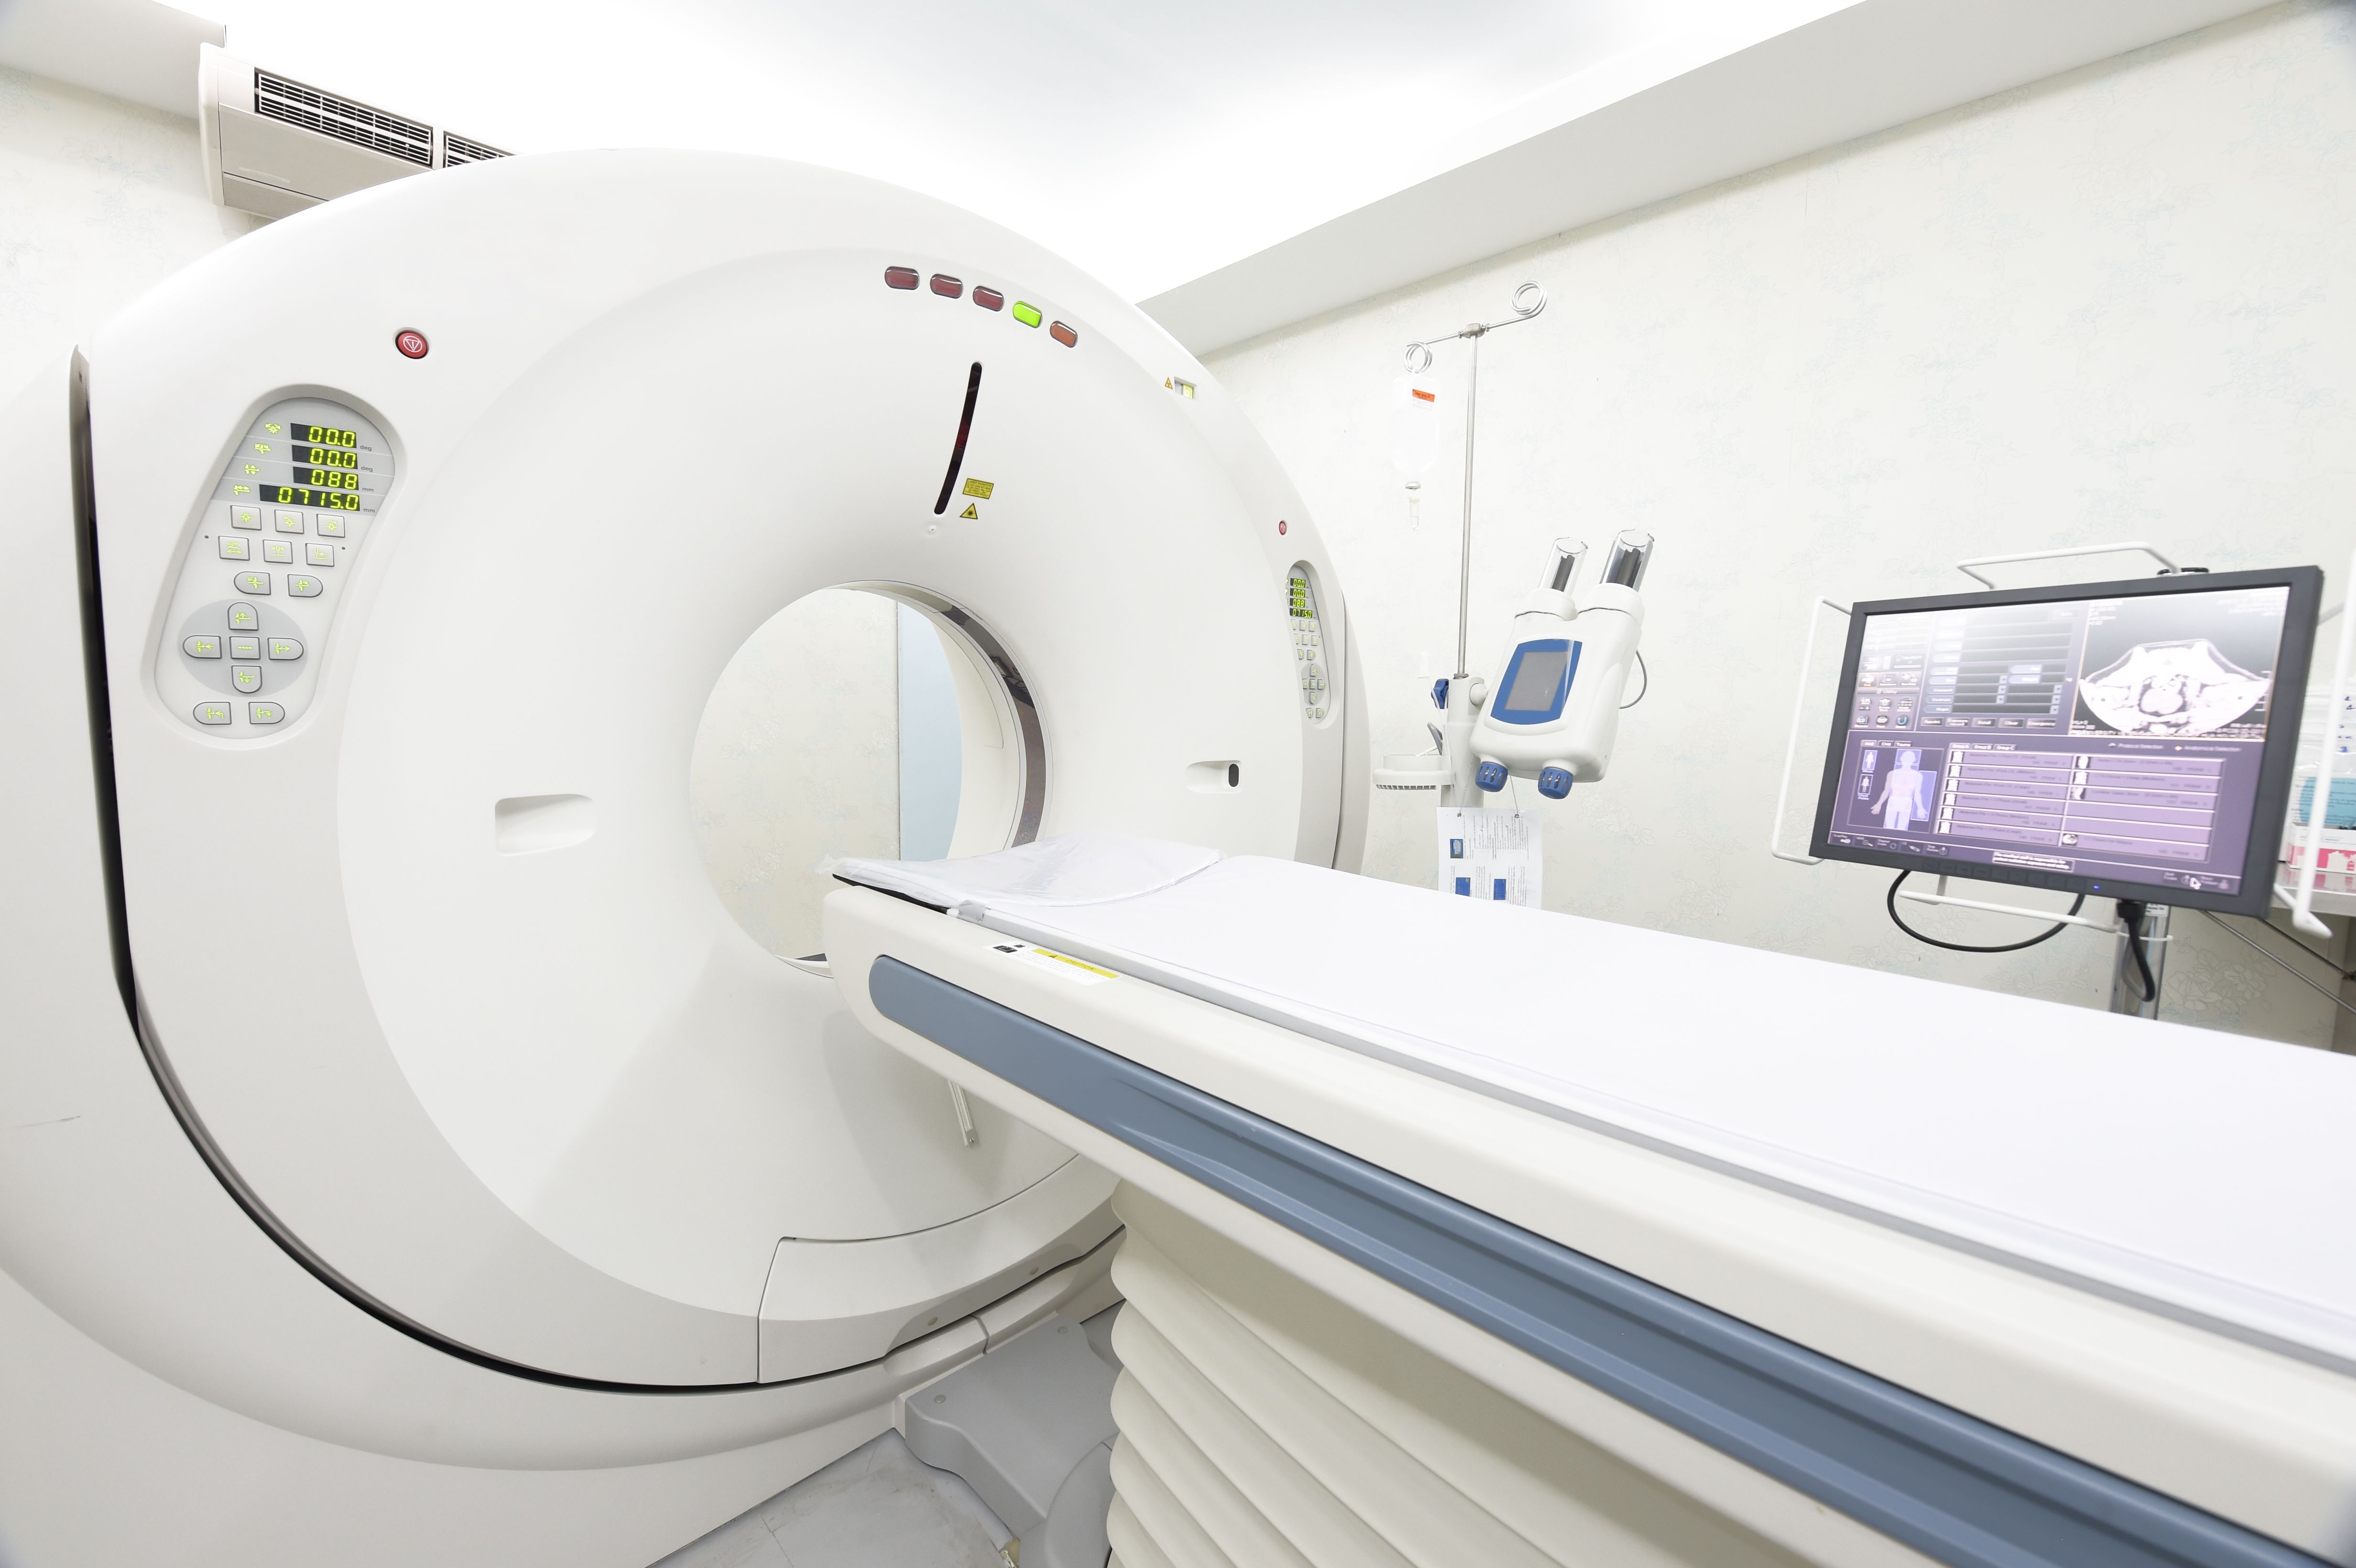 MRI scanner room. Image by nimon / Shutterstock. Undated.